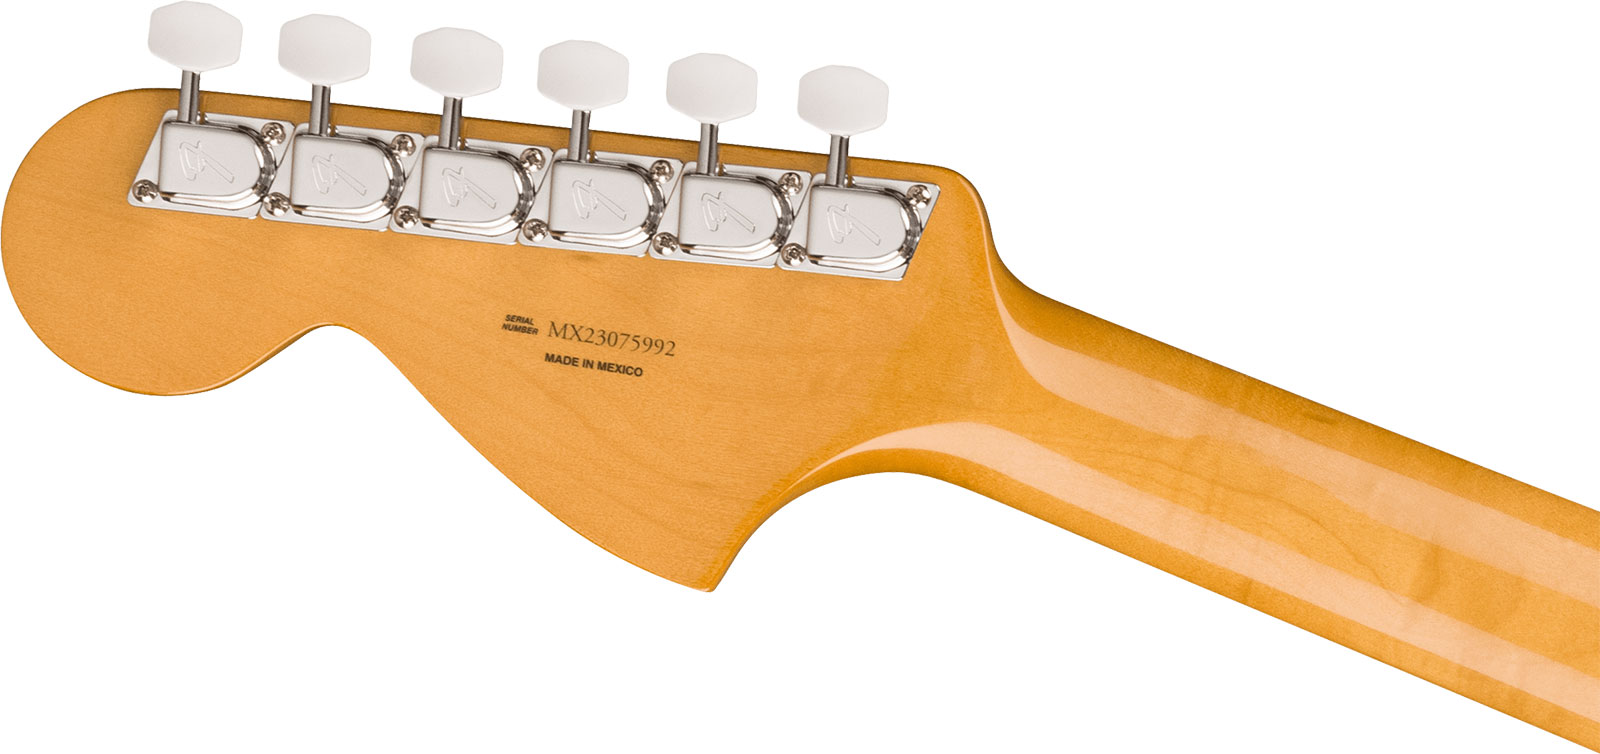 Fender Mustang 70s Competition Vintera 2 Mex 2s Trem Rw - Competition Orange - Guitarra electrica retro rock - Variation 3